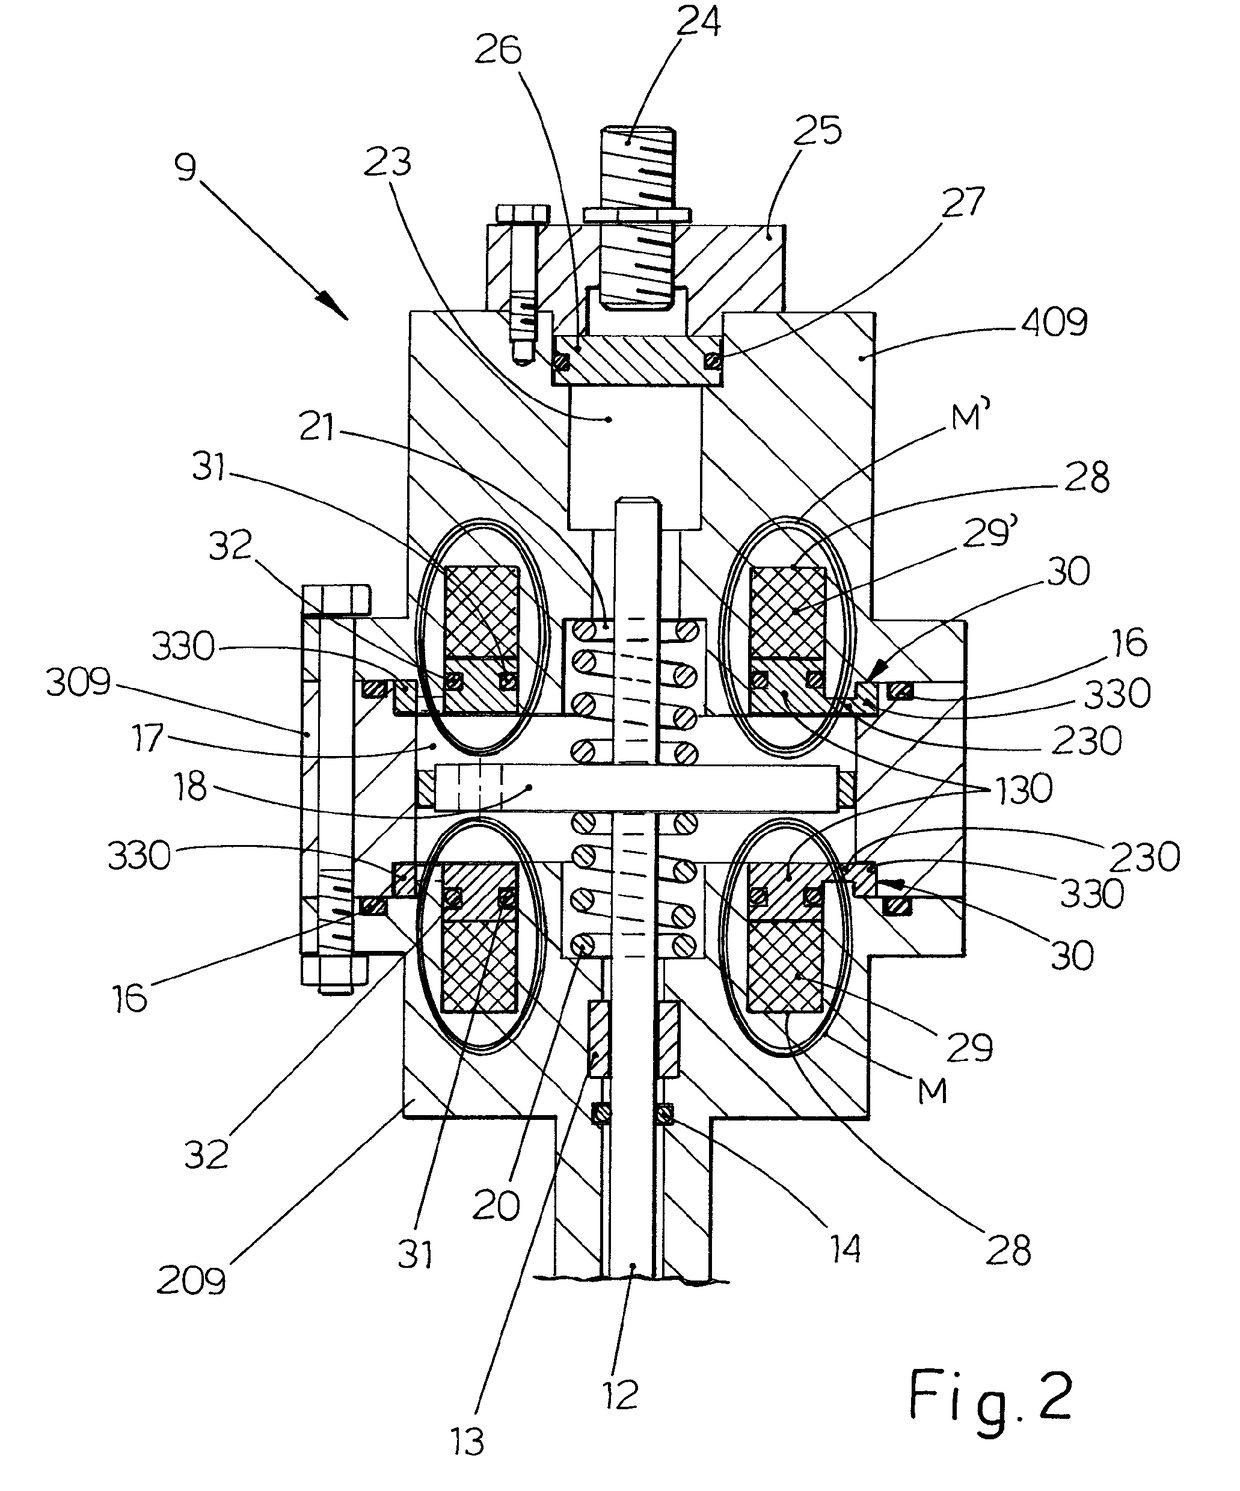 Flow control actuator for reciprocating compressors